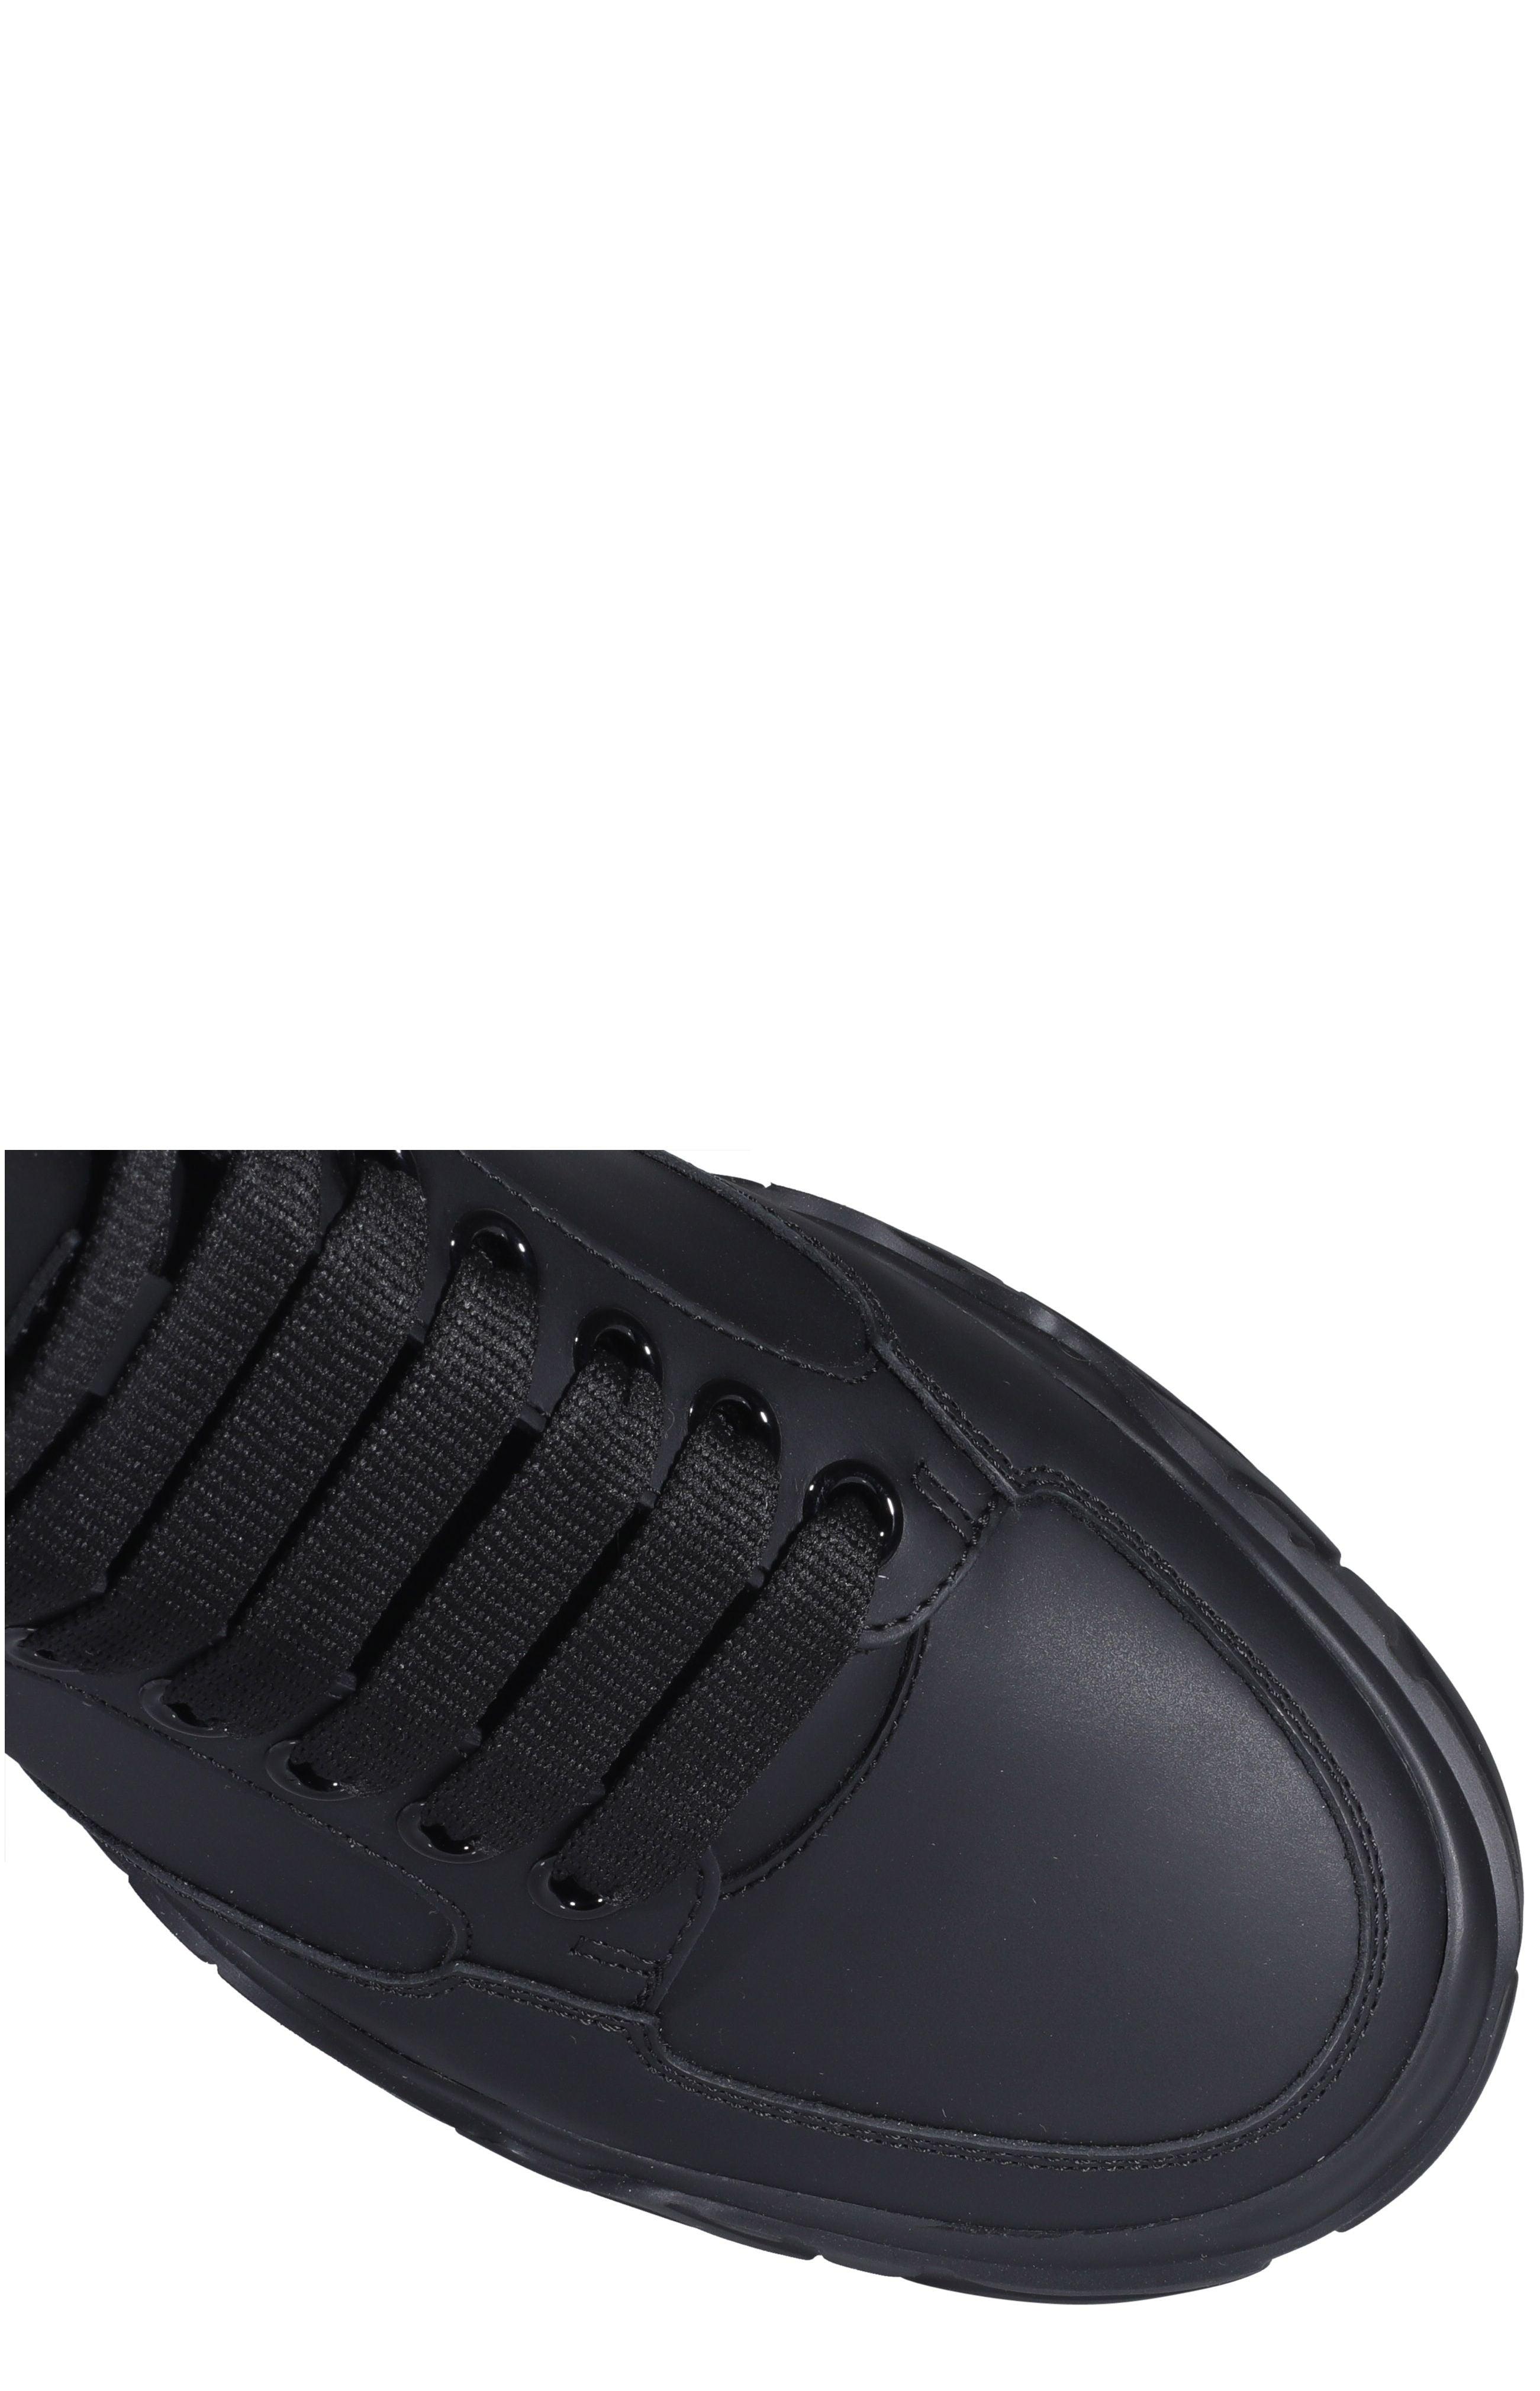 Alexander McQueen Leather Court High-top Sneakers in Black for Men - Lyst